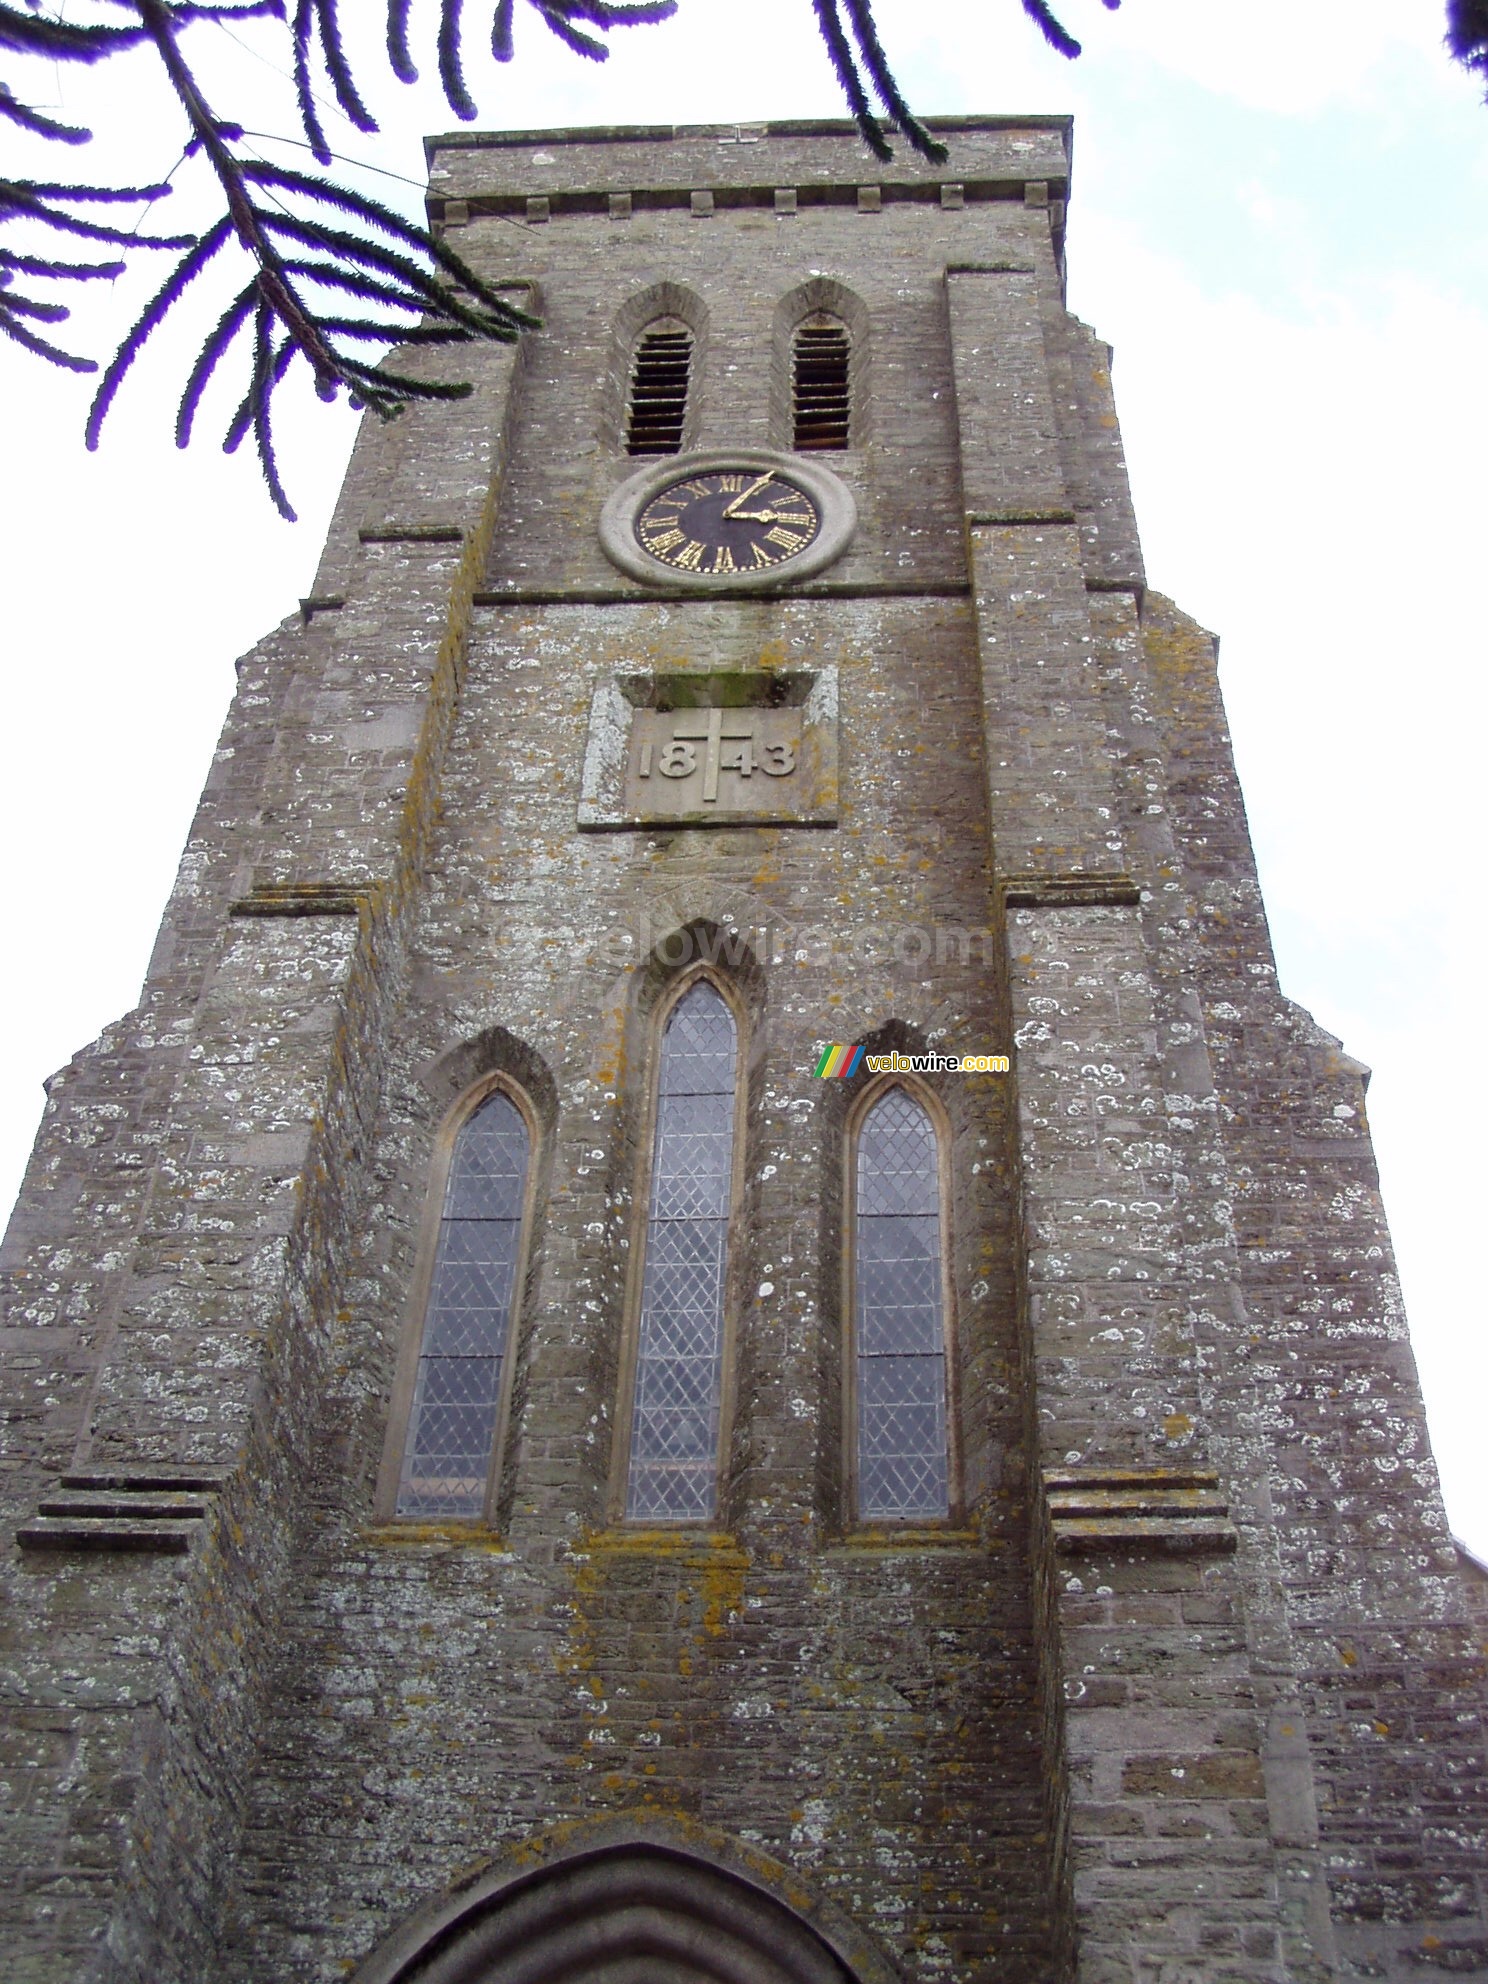 The church of Salcombe